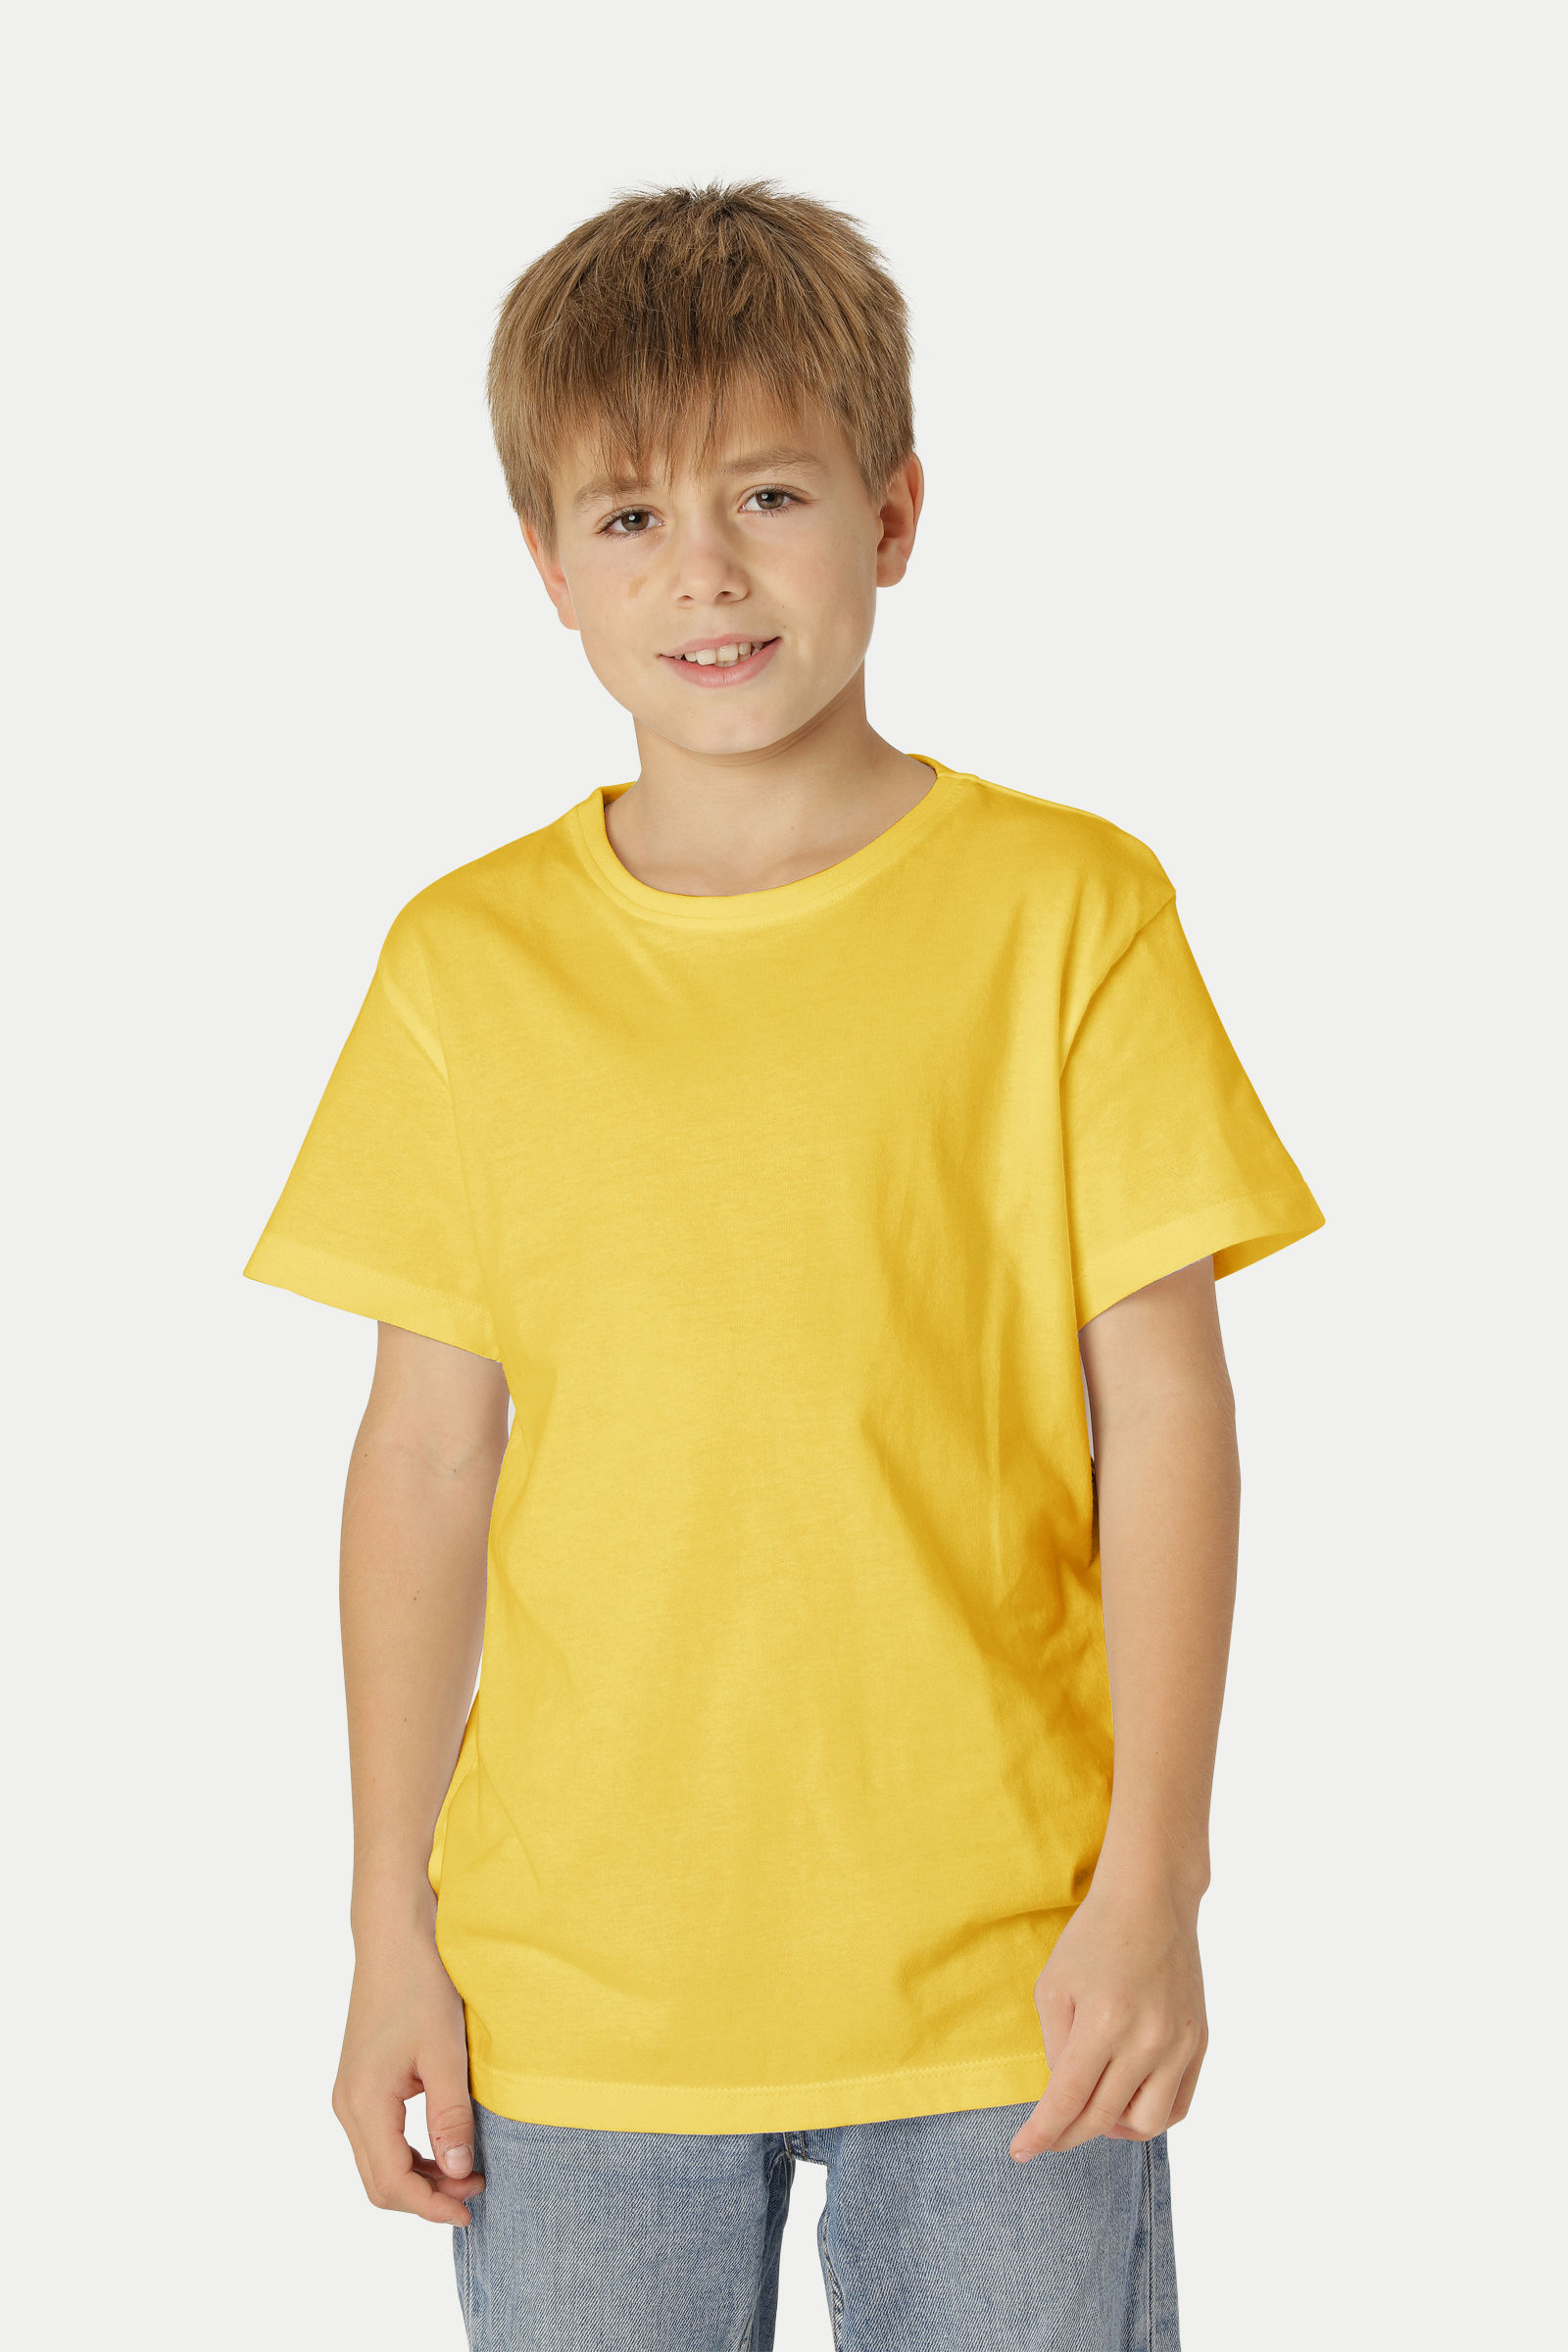 Diktere nedbrydes Citron GUL T-shirt - Barn - Neutral - Fairtrade & EKO GOTS - Ekotrade Nordic